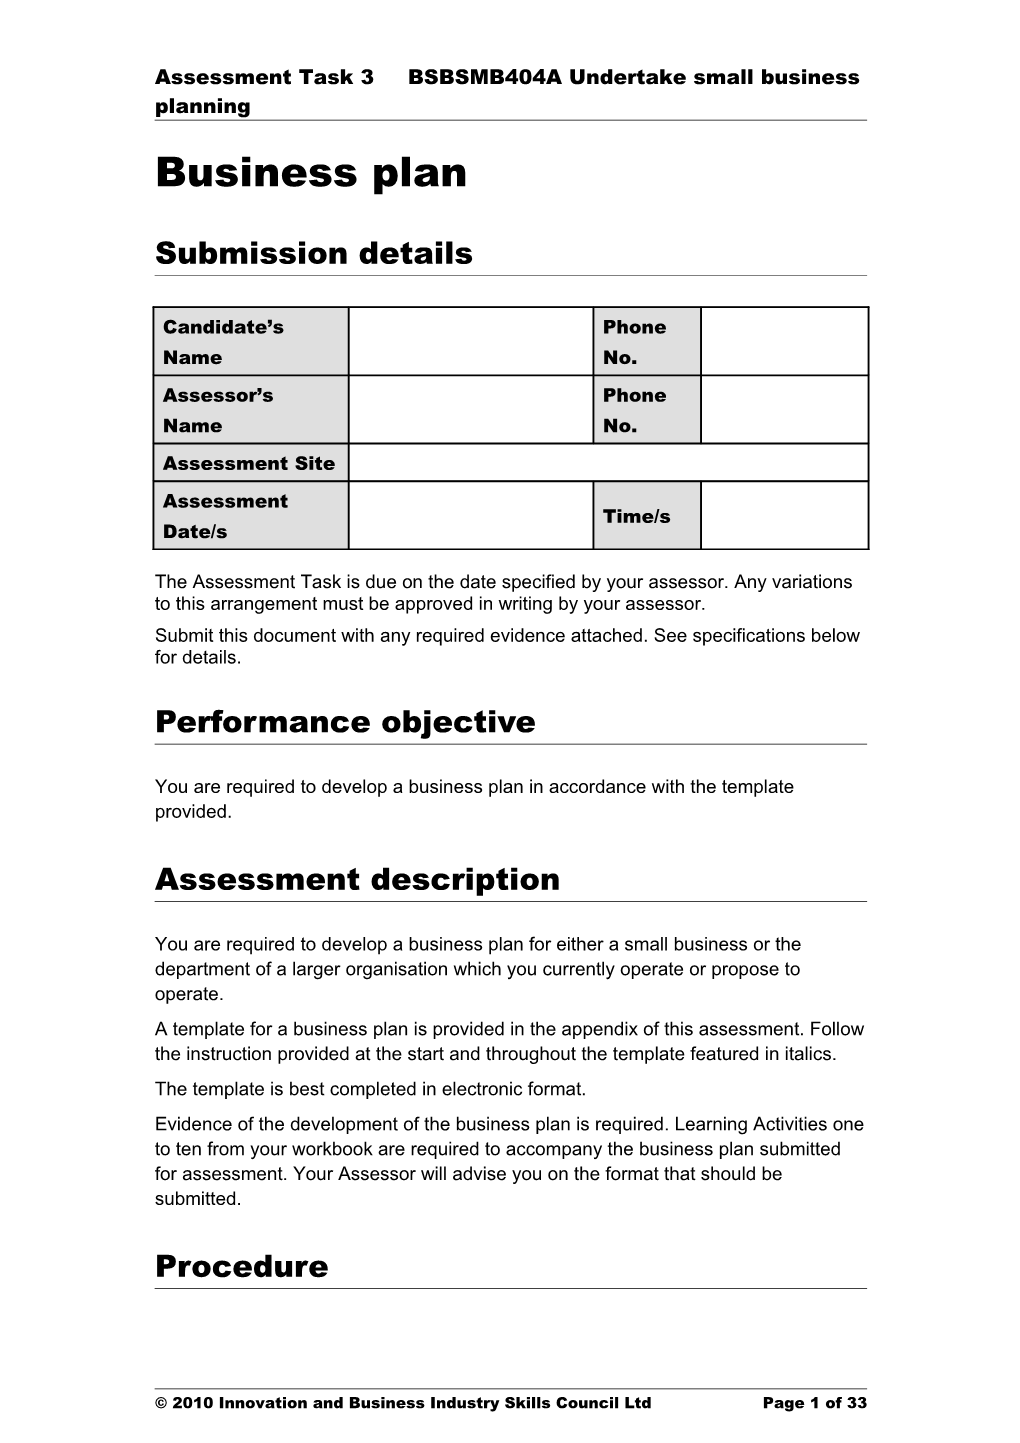 Assessment Task 3 BSBSMB404A Undertake Small Business Planning